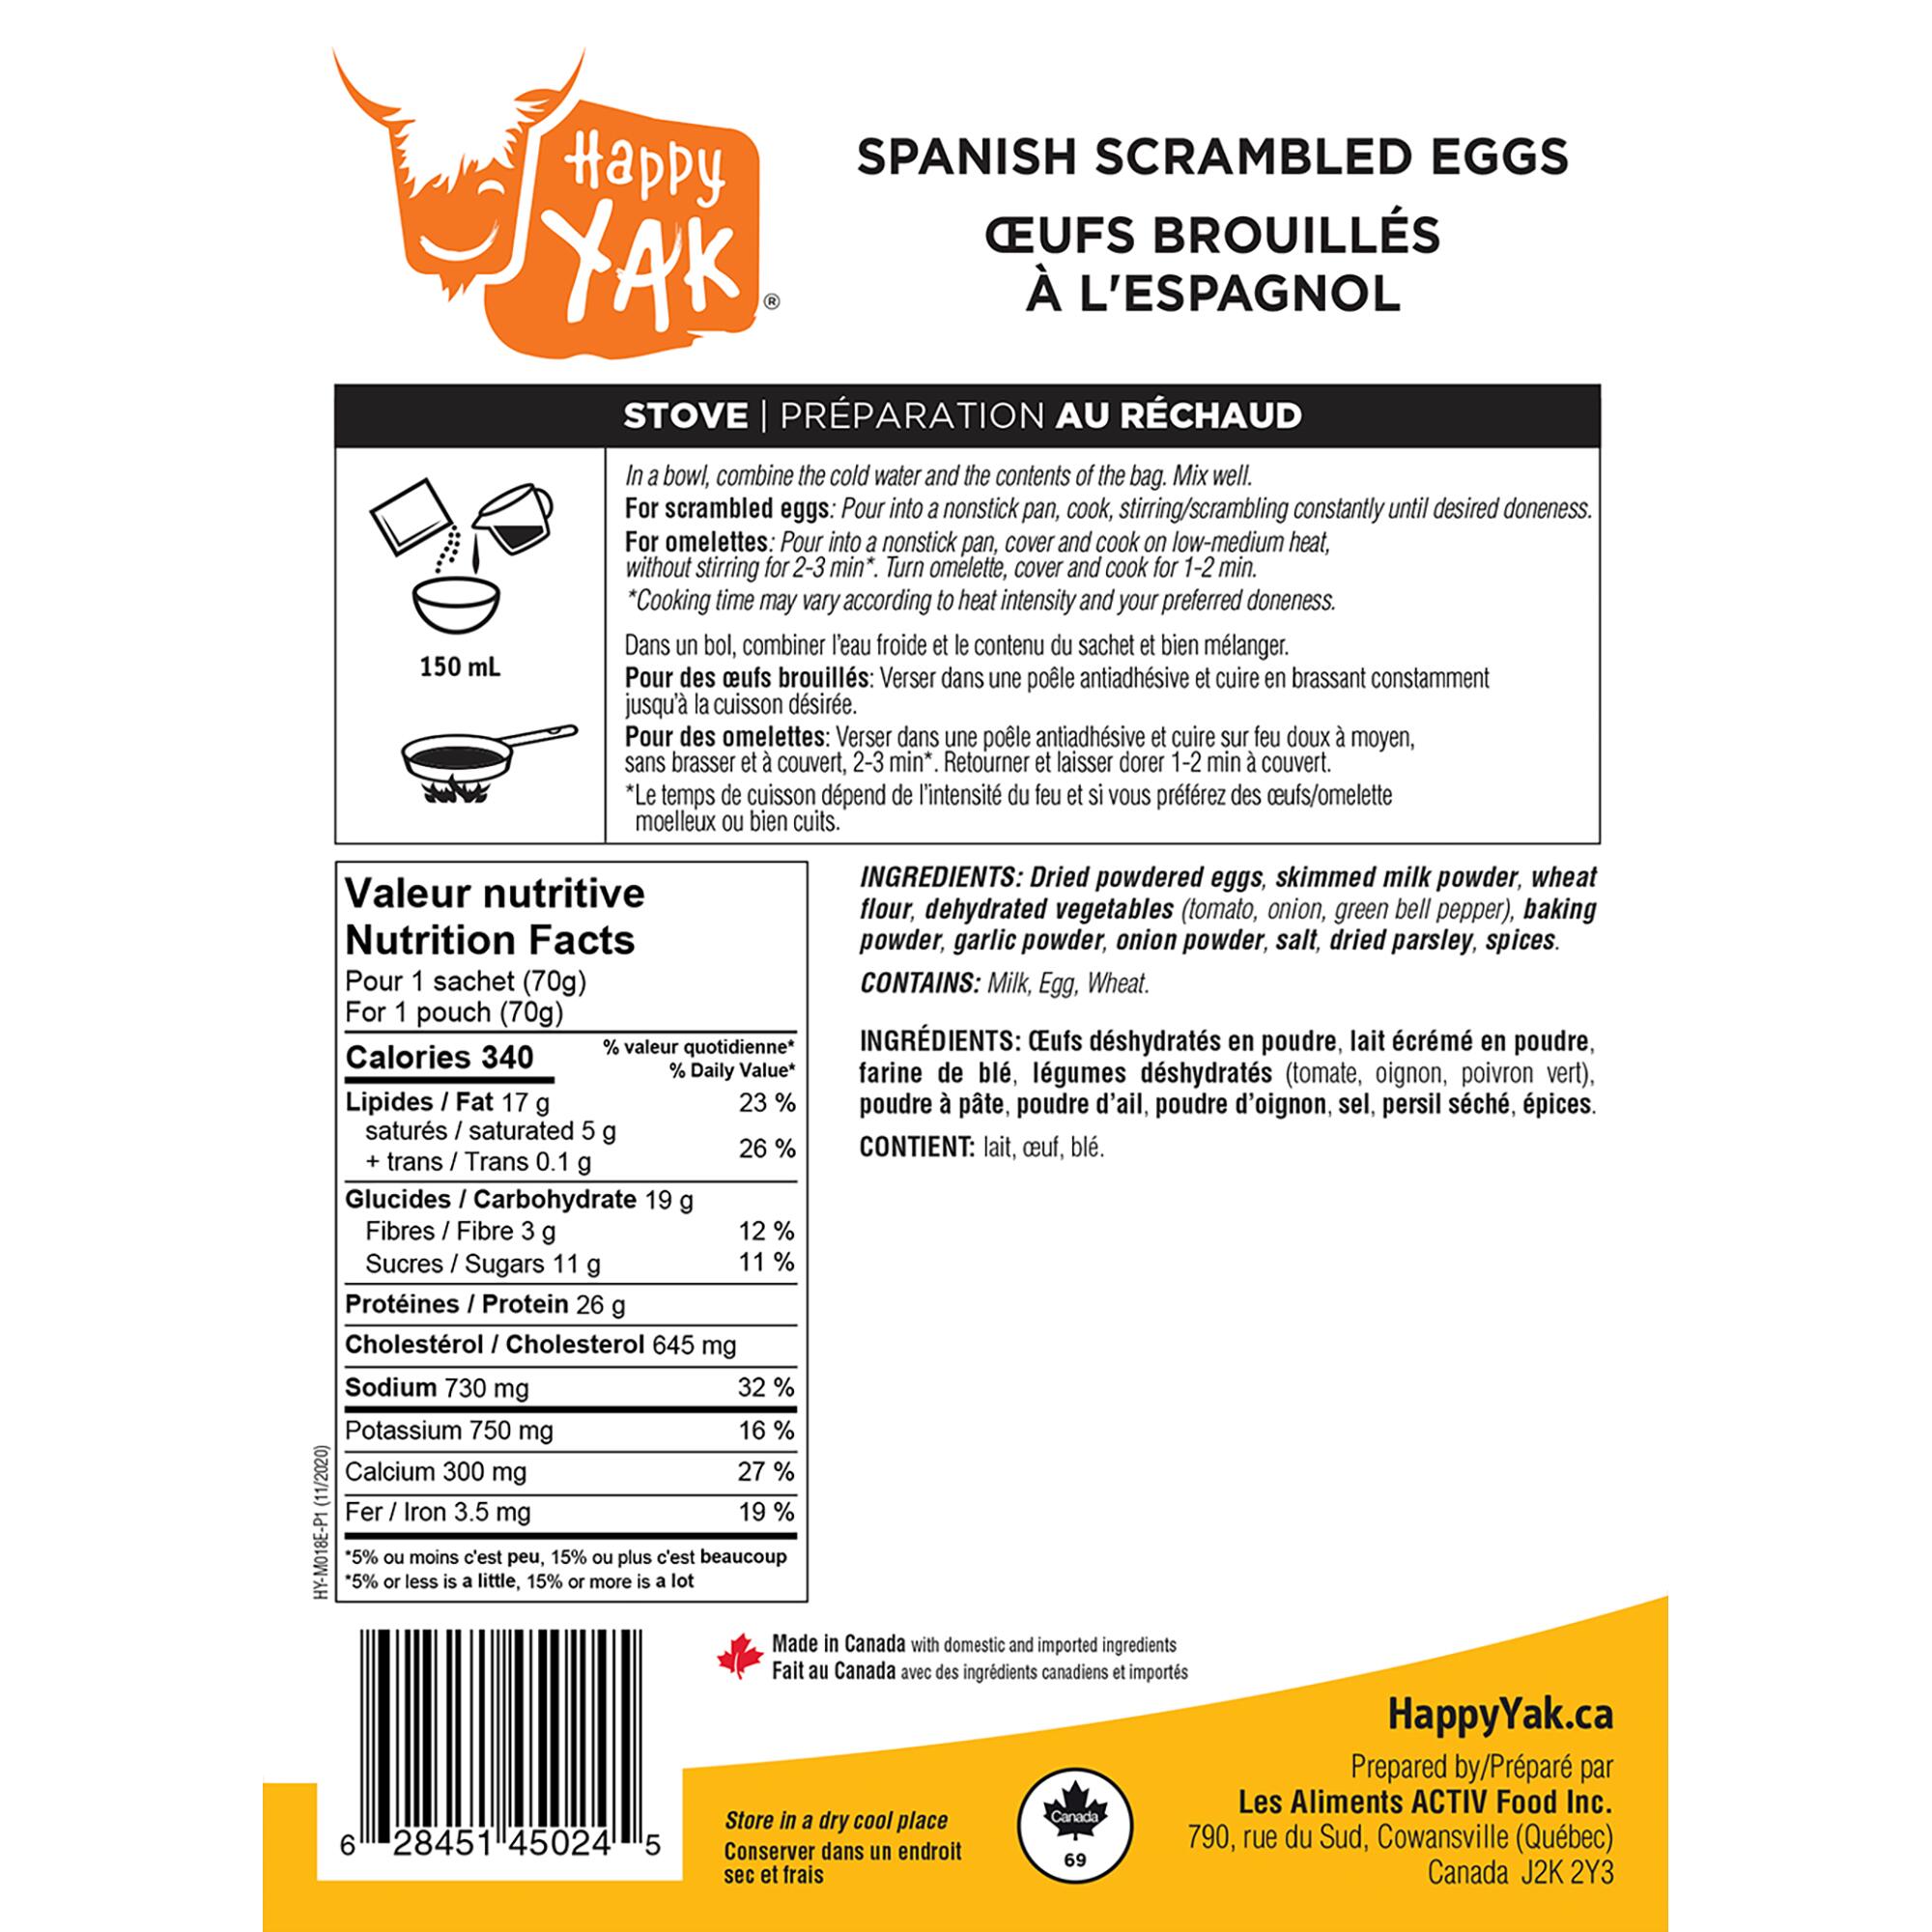 Spanish-Style Scrambled Eggs - HAPPY YAK